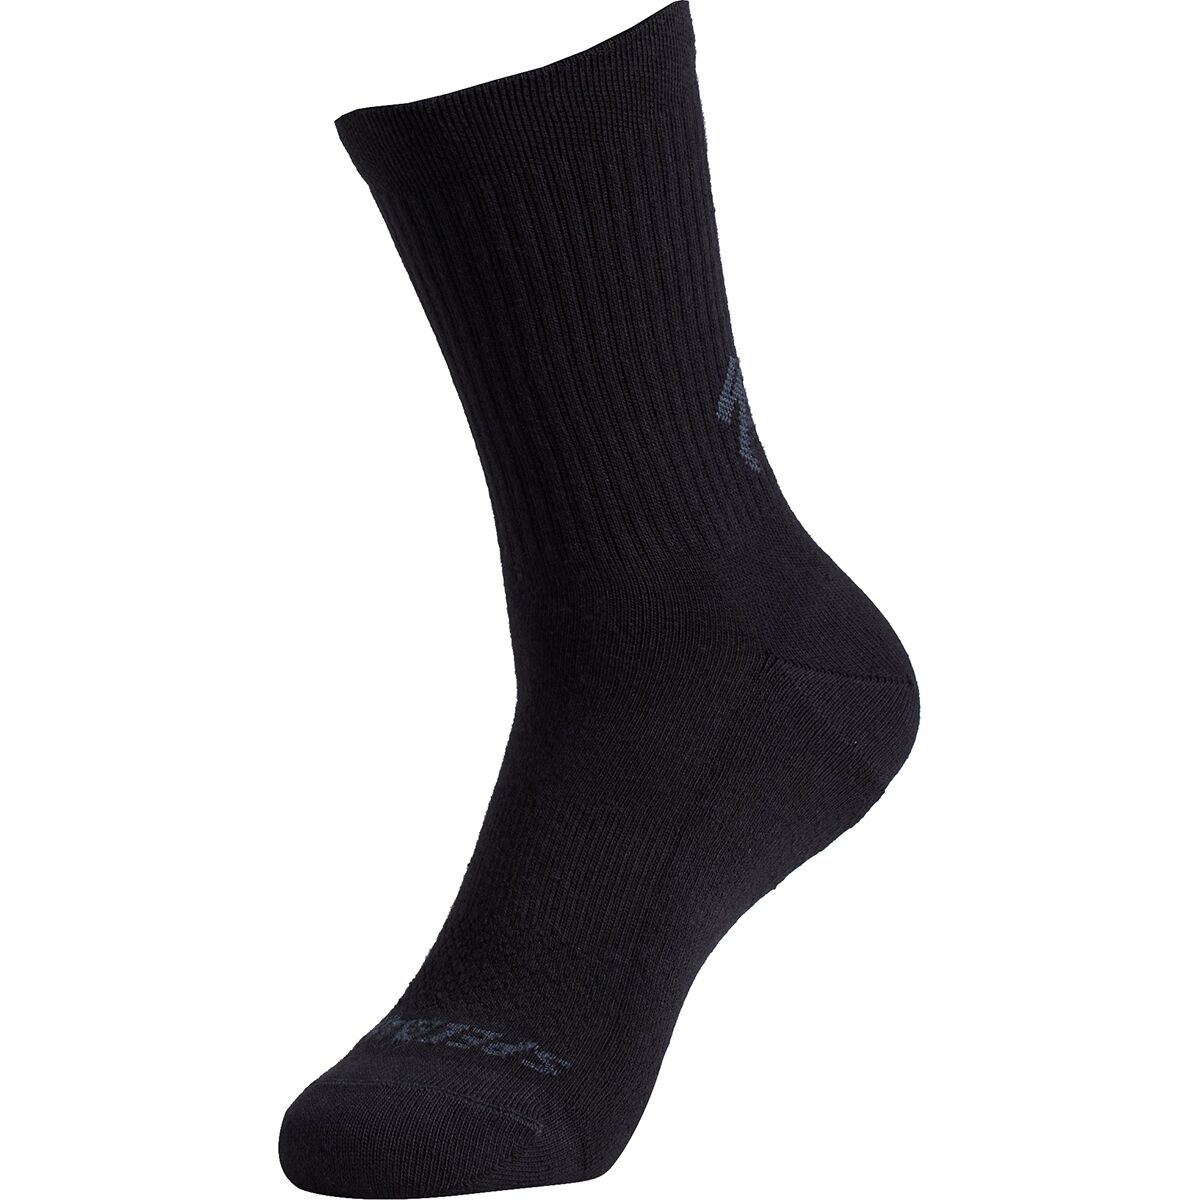 Specialized Cotton Tall Sock Black, L - Men's